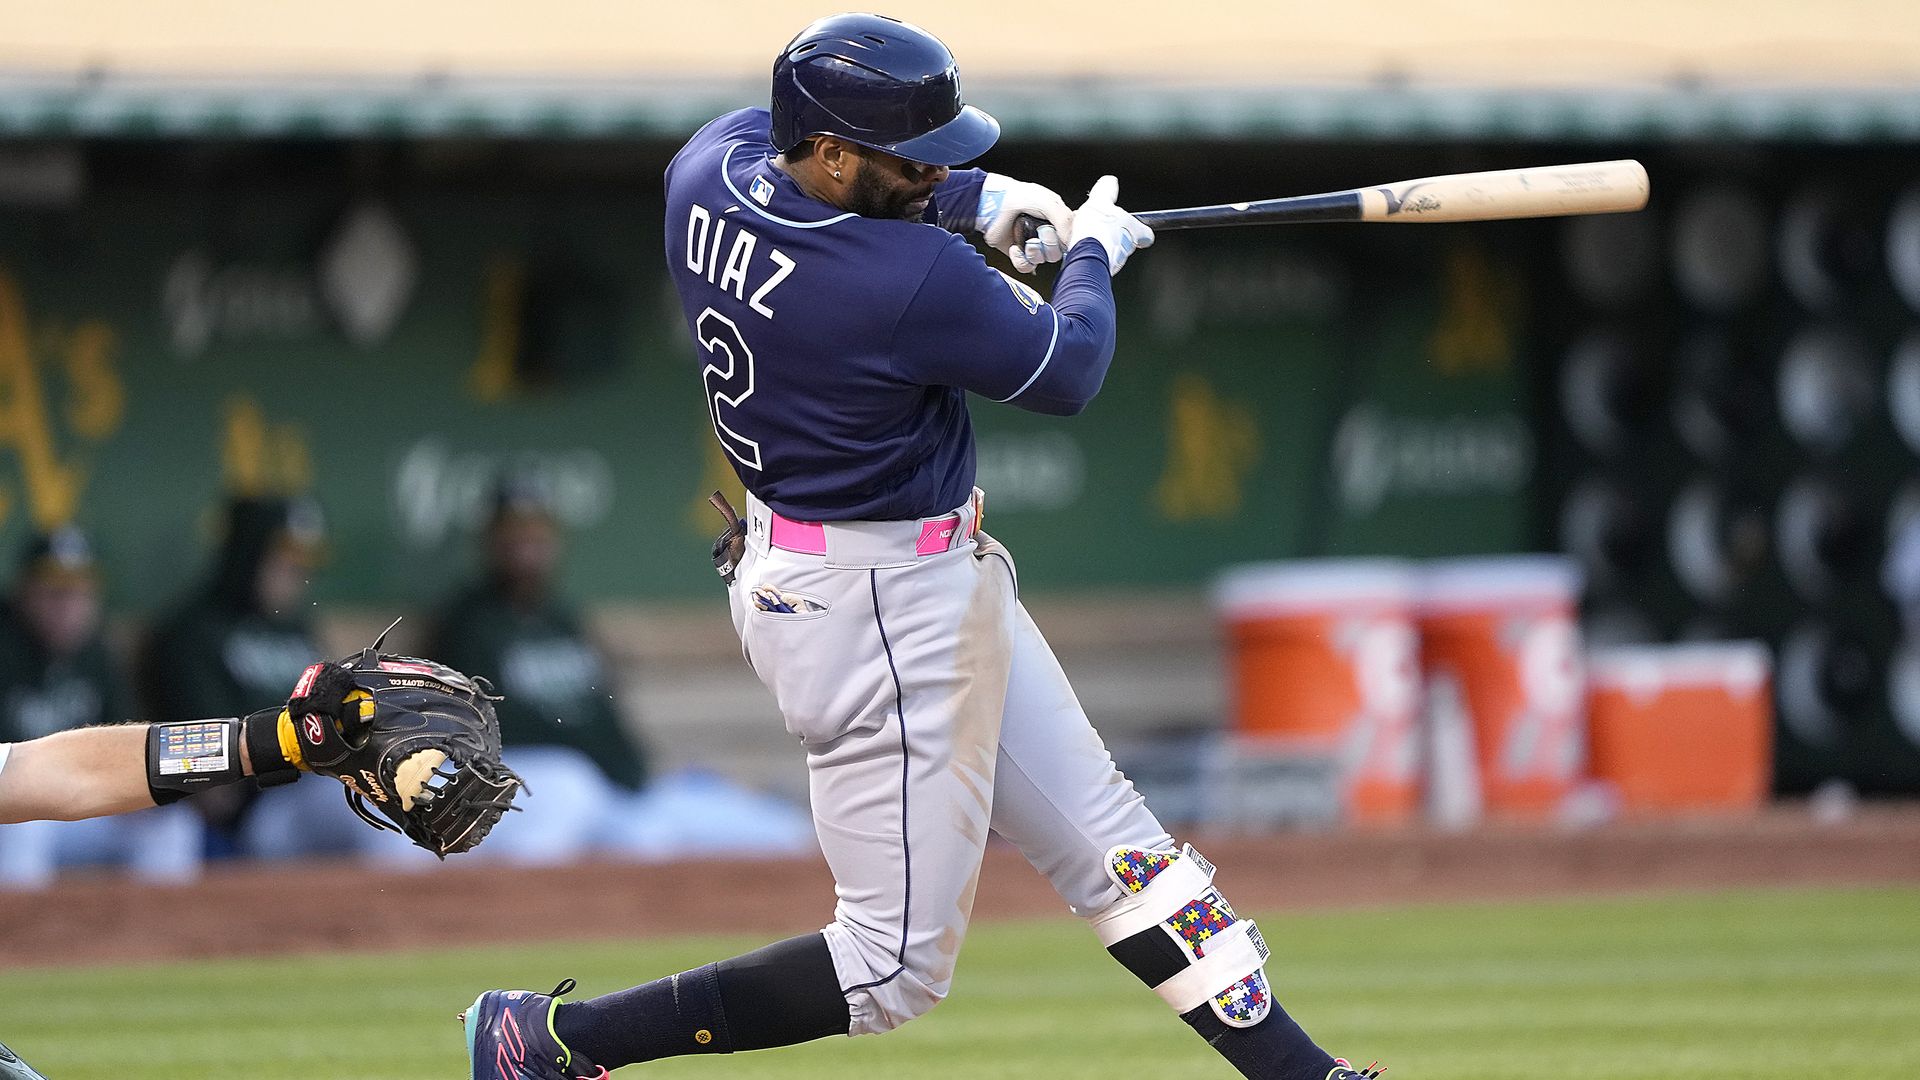 Tampa Bay Rays first baseman Yandy Díaz swinging his bat, wearing a navy jersey.